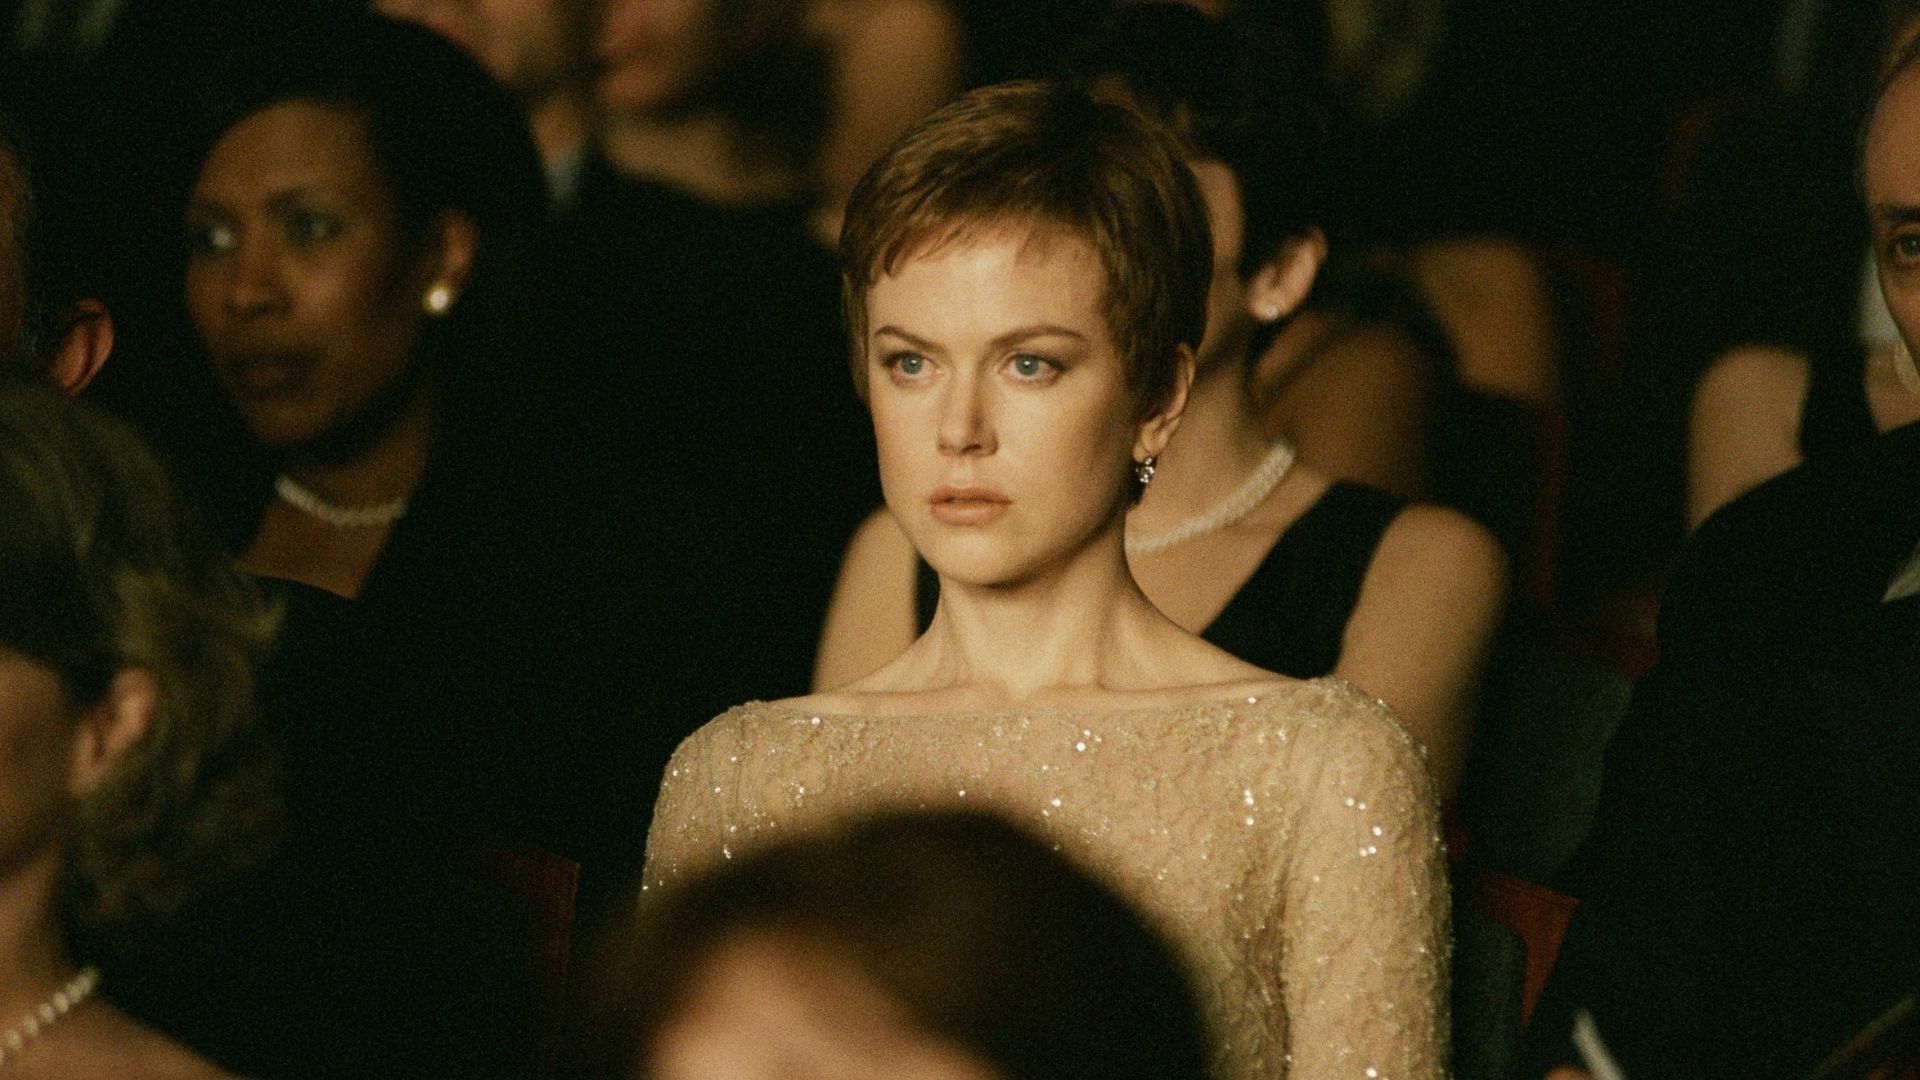 Nicole Kidman in "Birth"